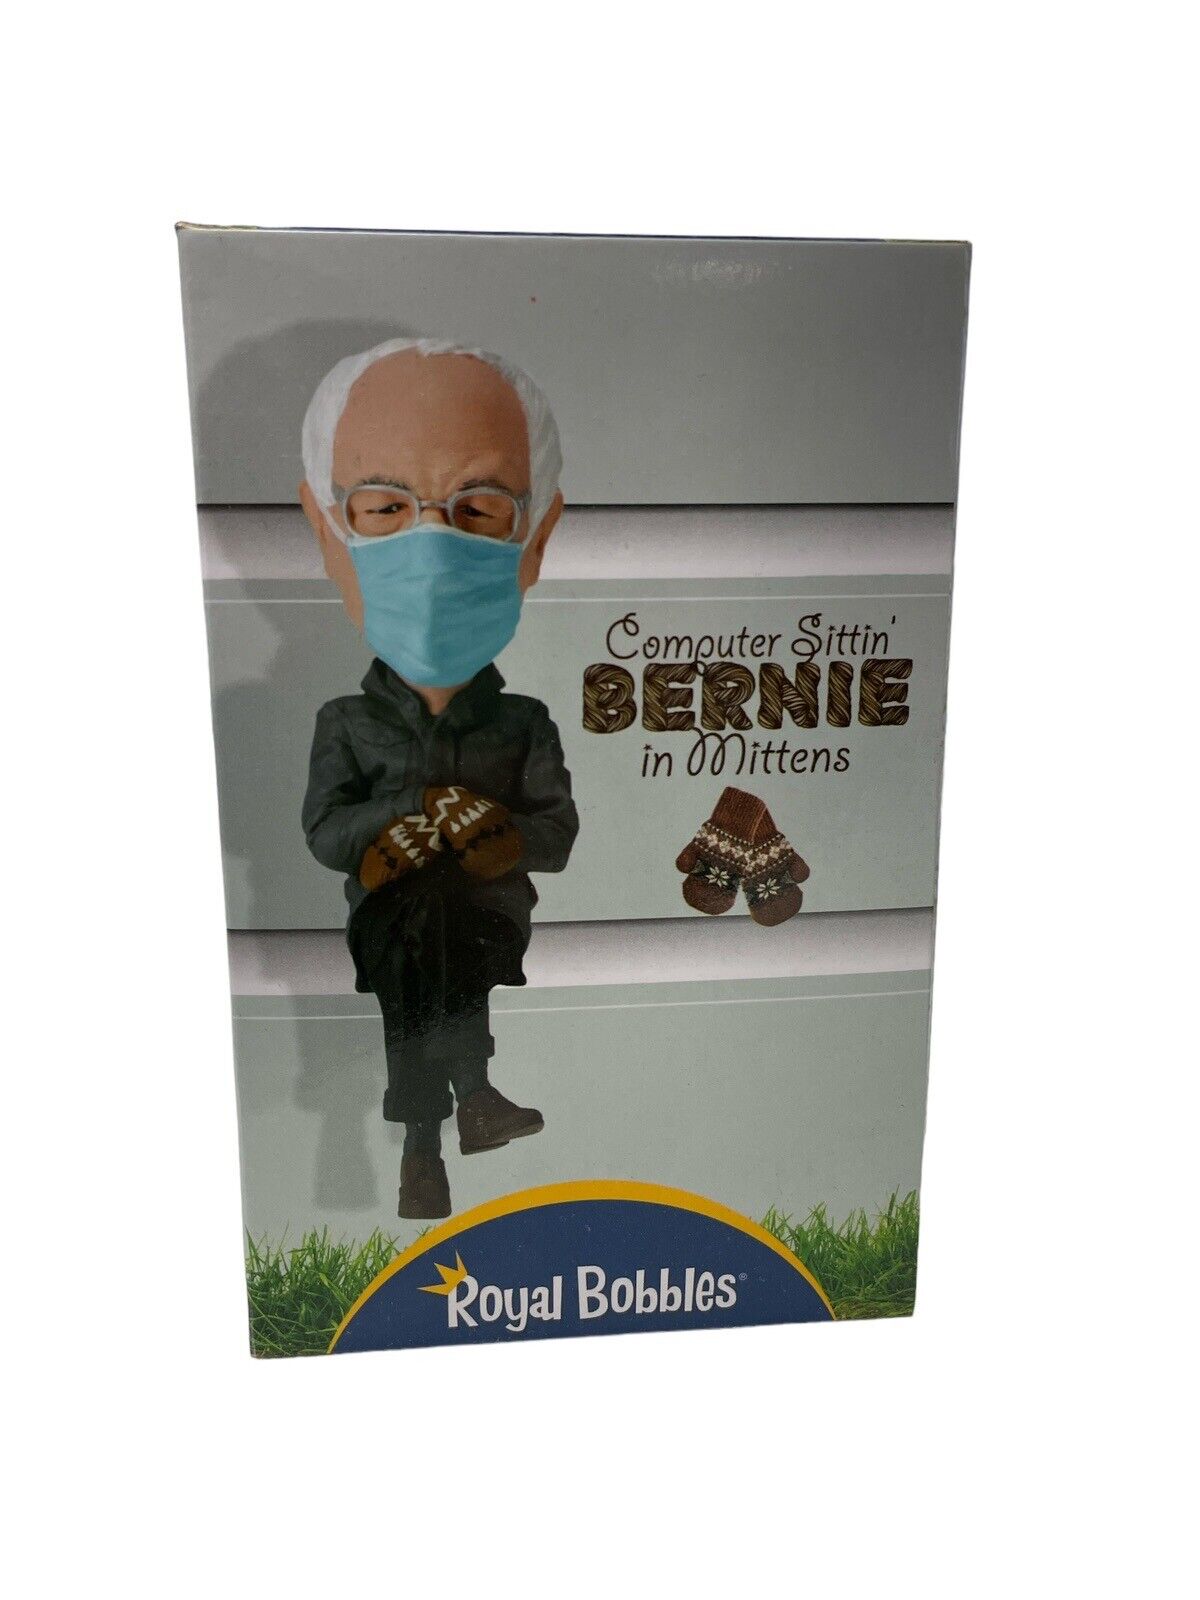 Royal Bobbles Computer Sitting Bernie Sanders Mittens LE Exclusive Bobblehead